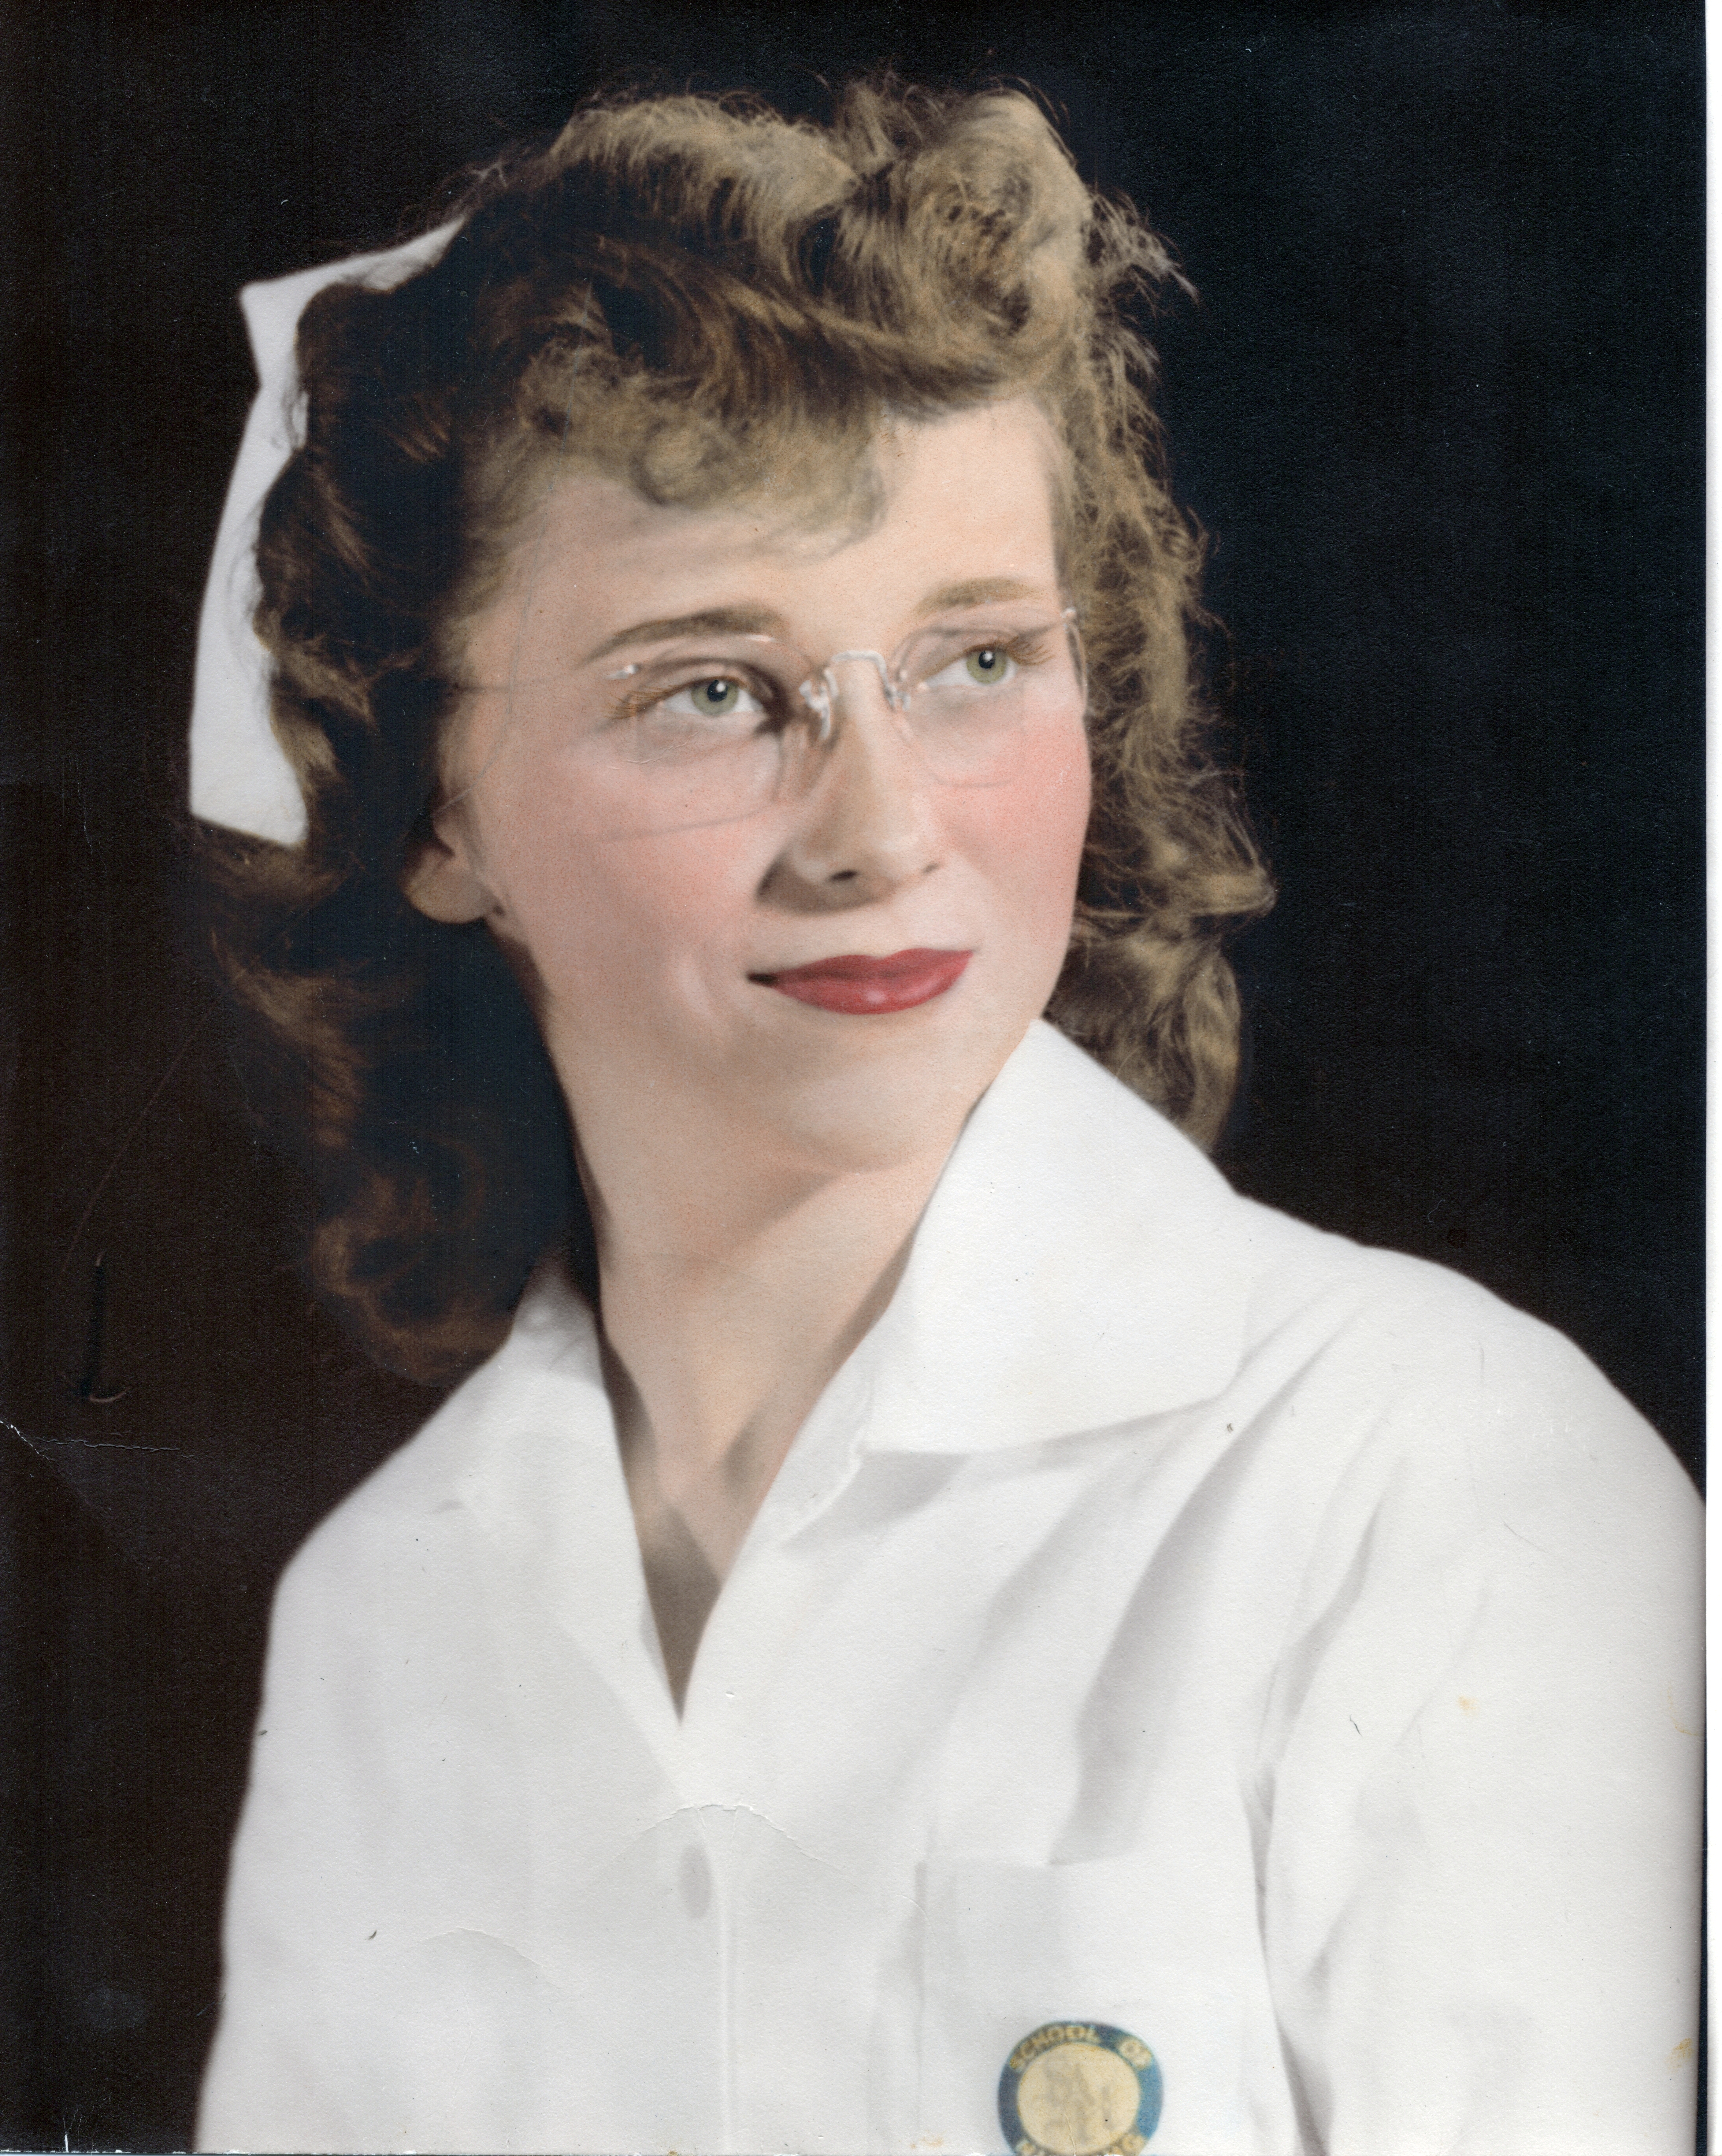 Nurse Emerson